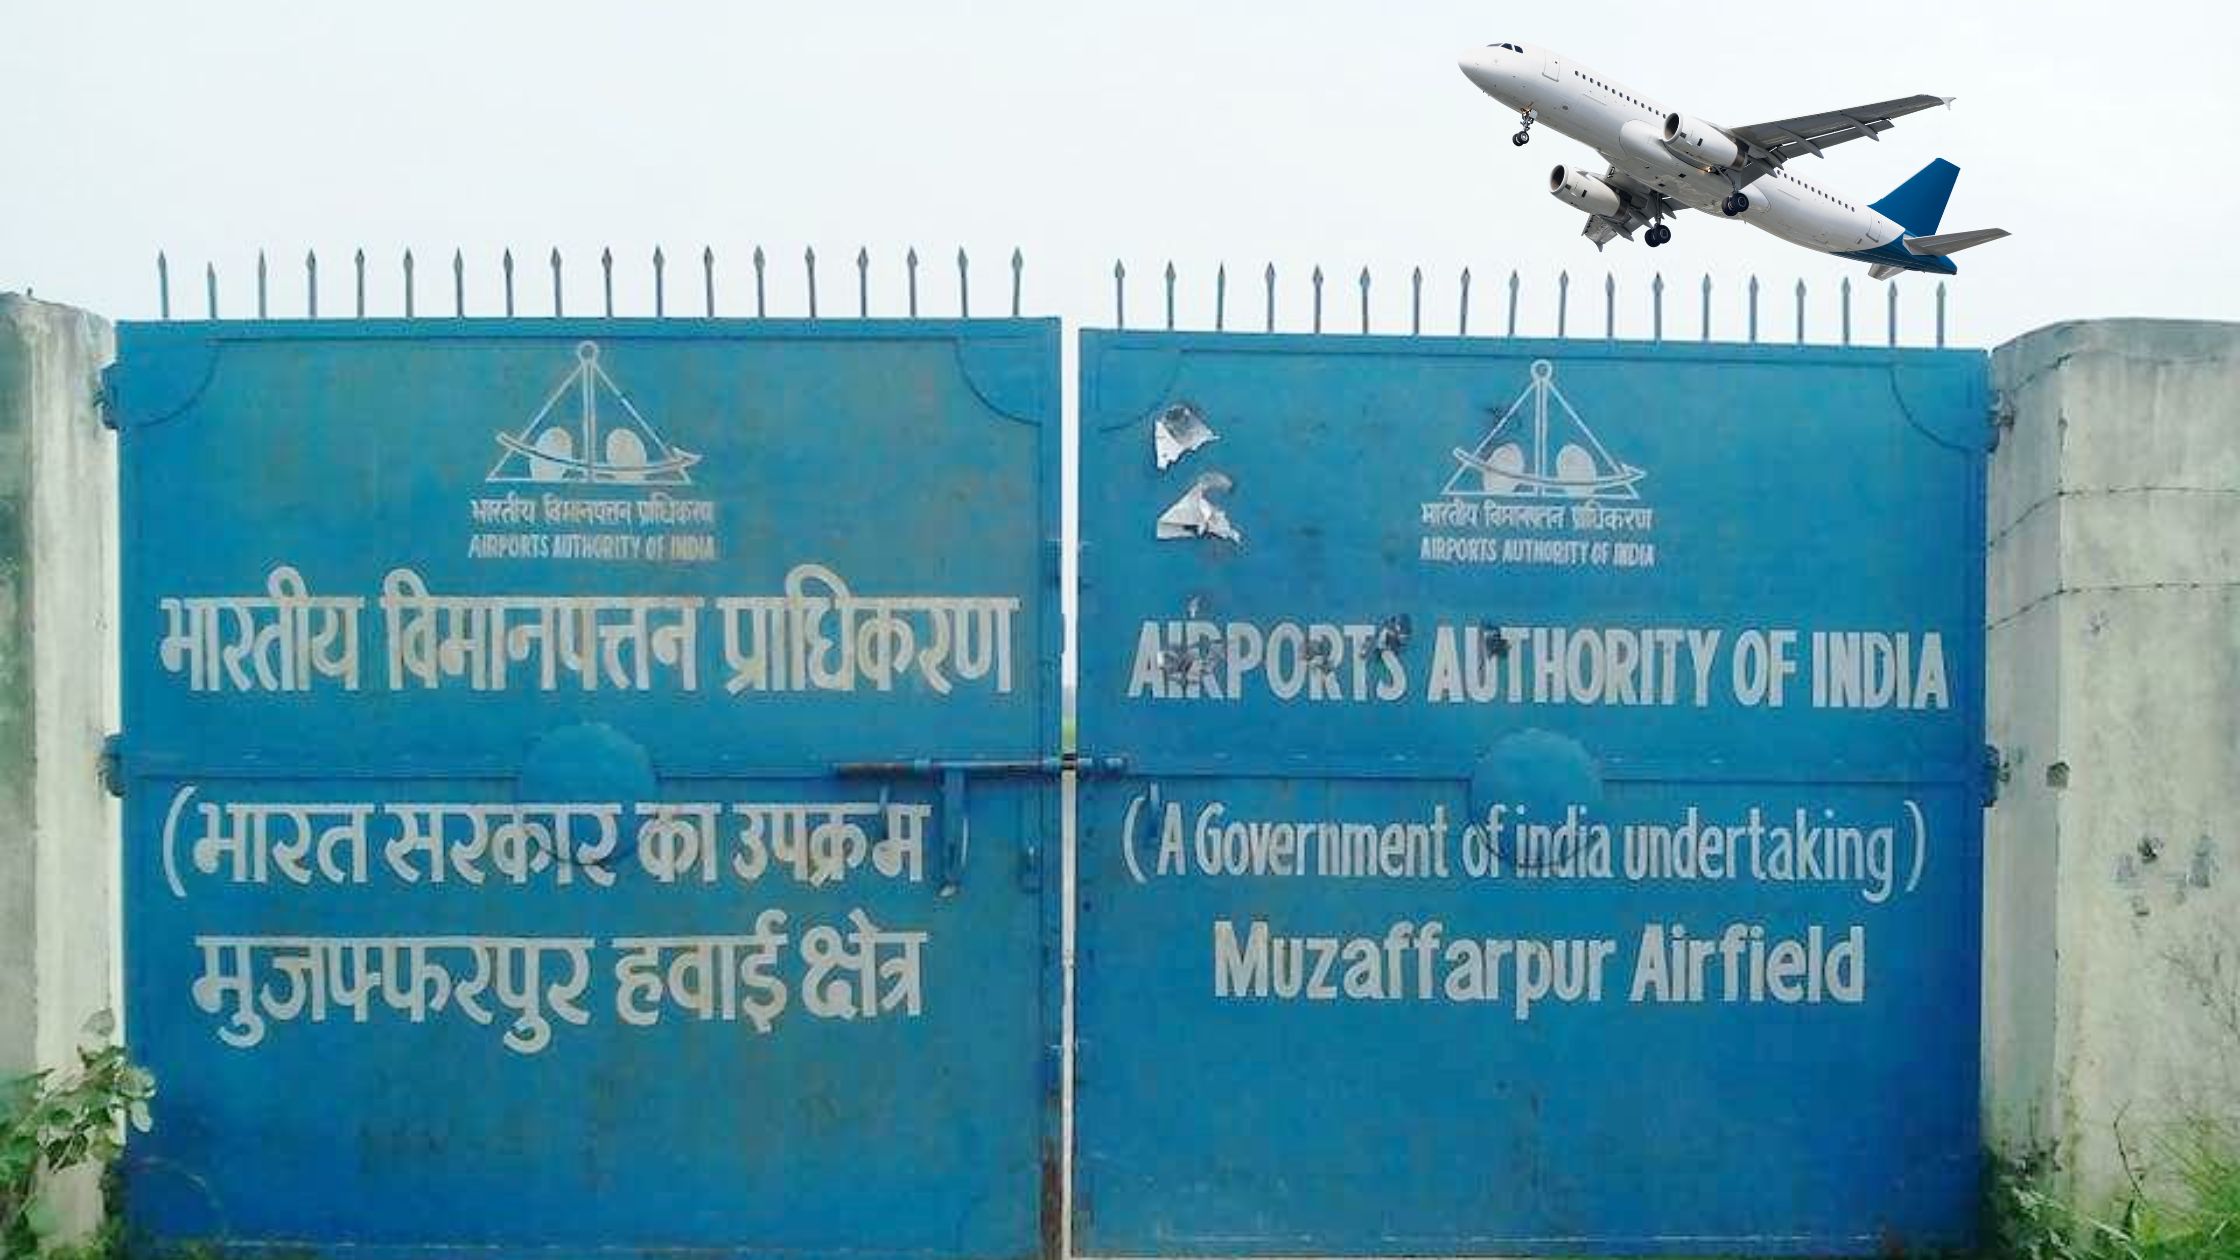 air service to start shortly from muzaffarpur